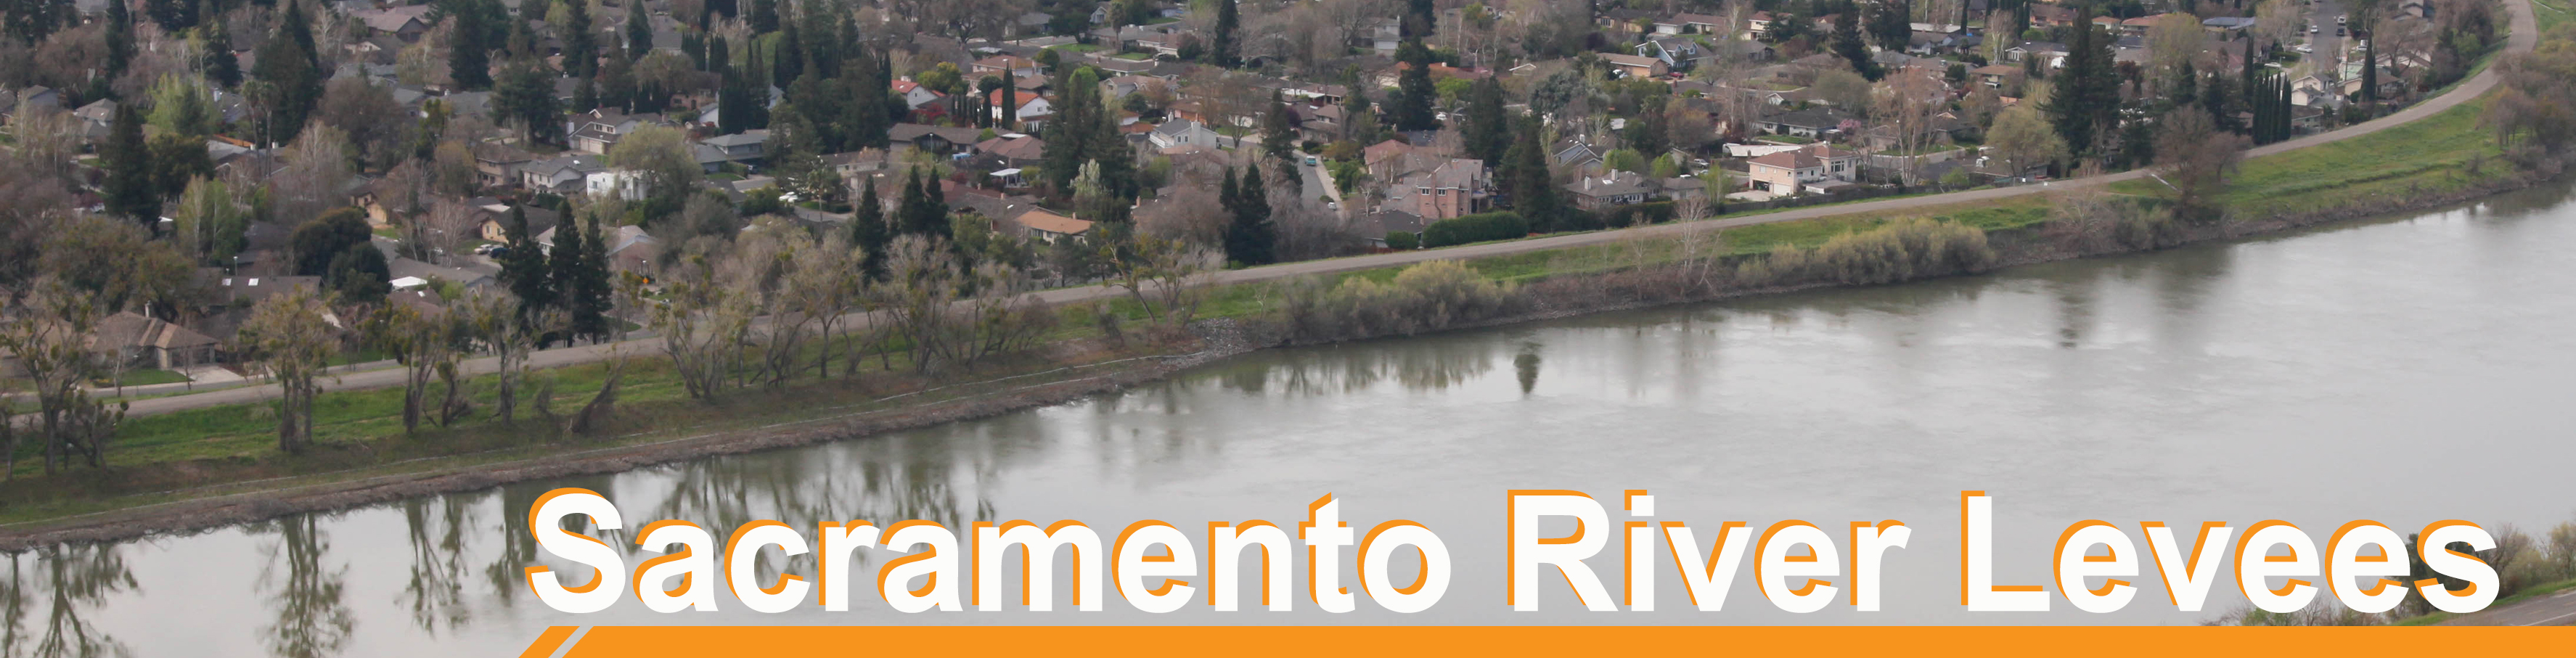 Banner - Sacramento River Levees